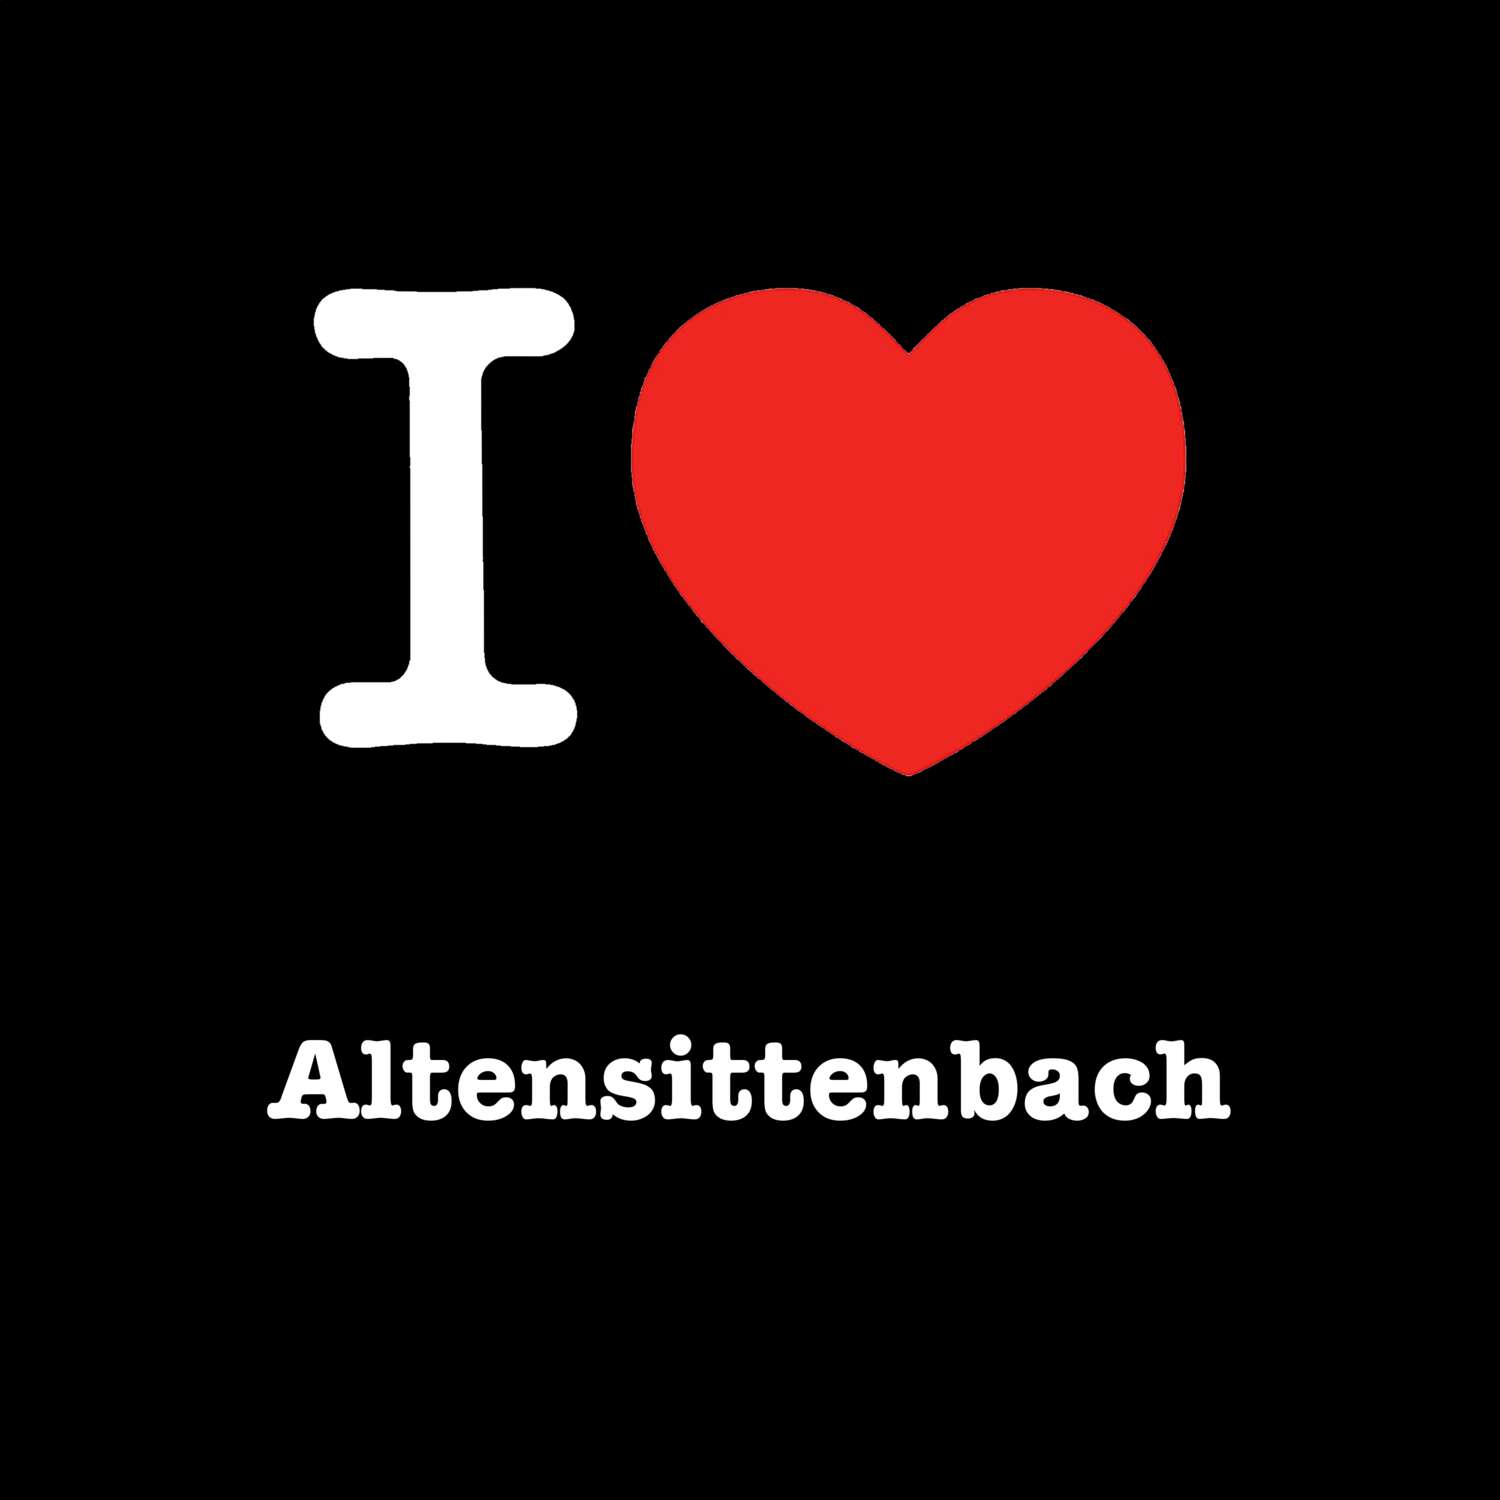 Altensittenbach T-Shirt »I love«